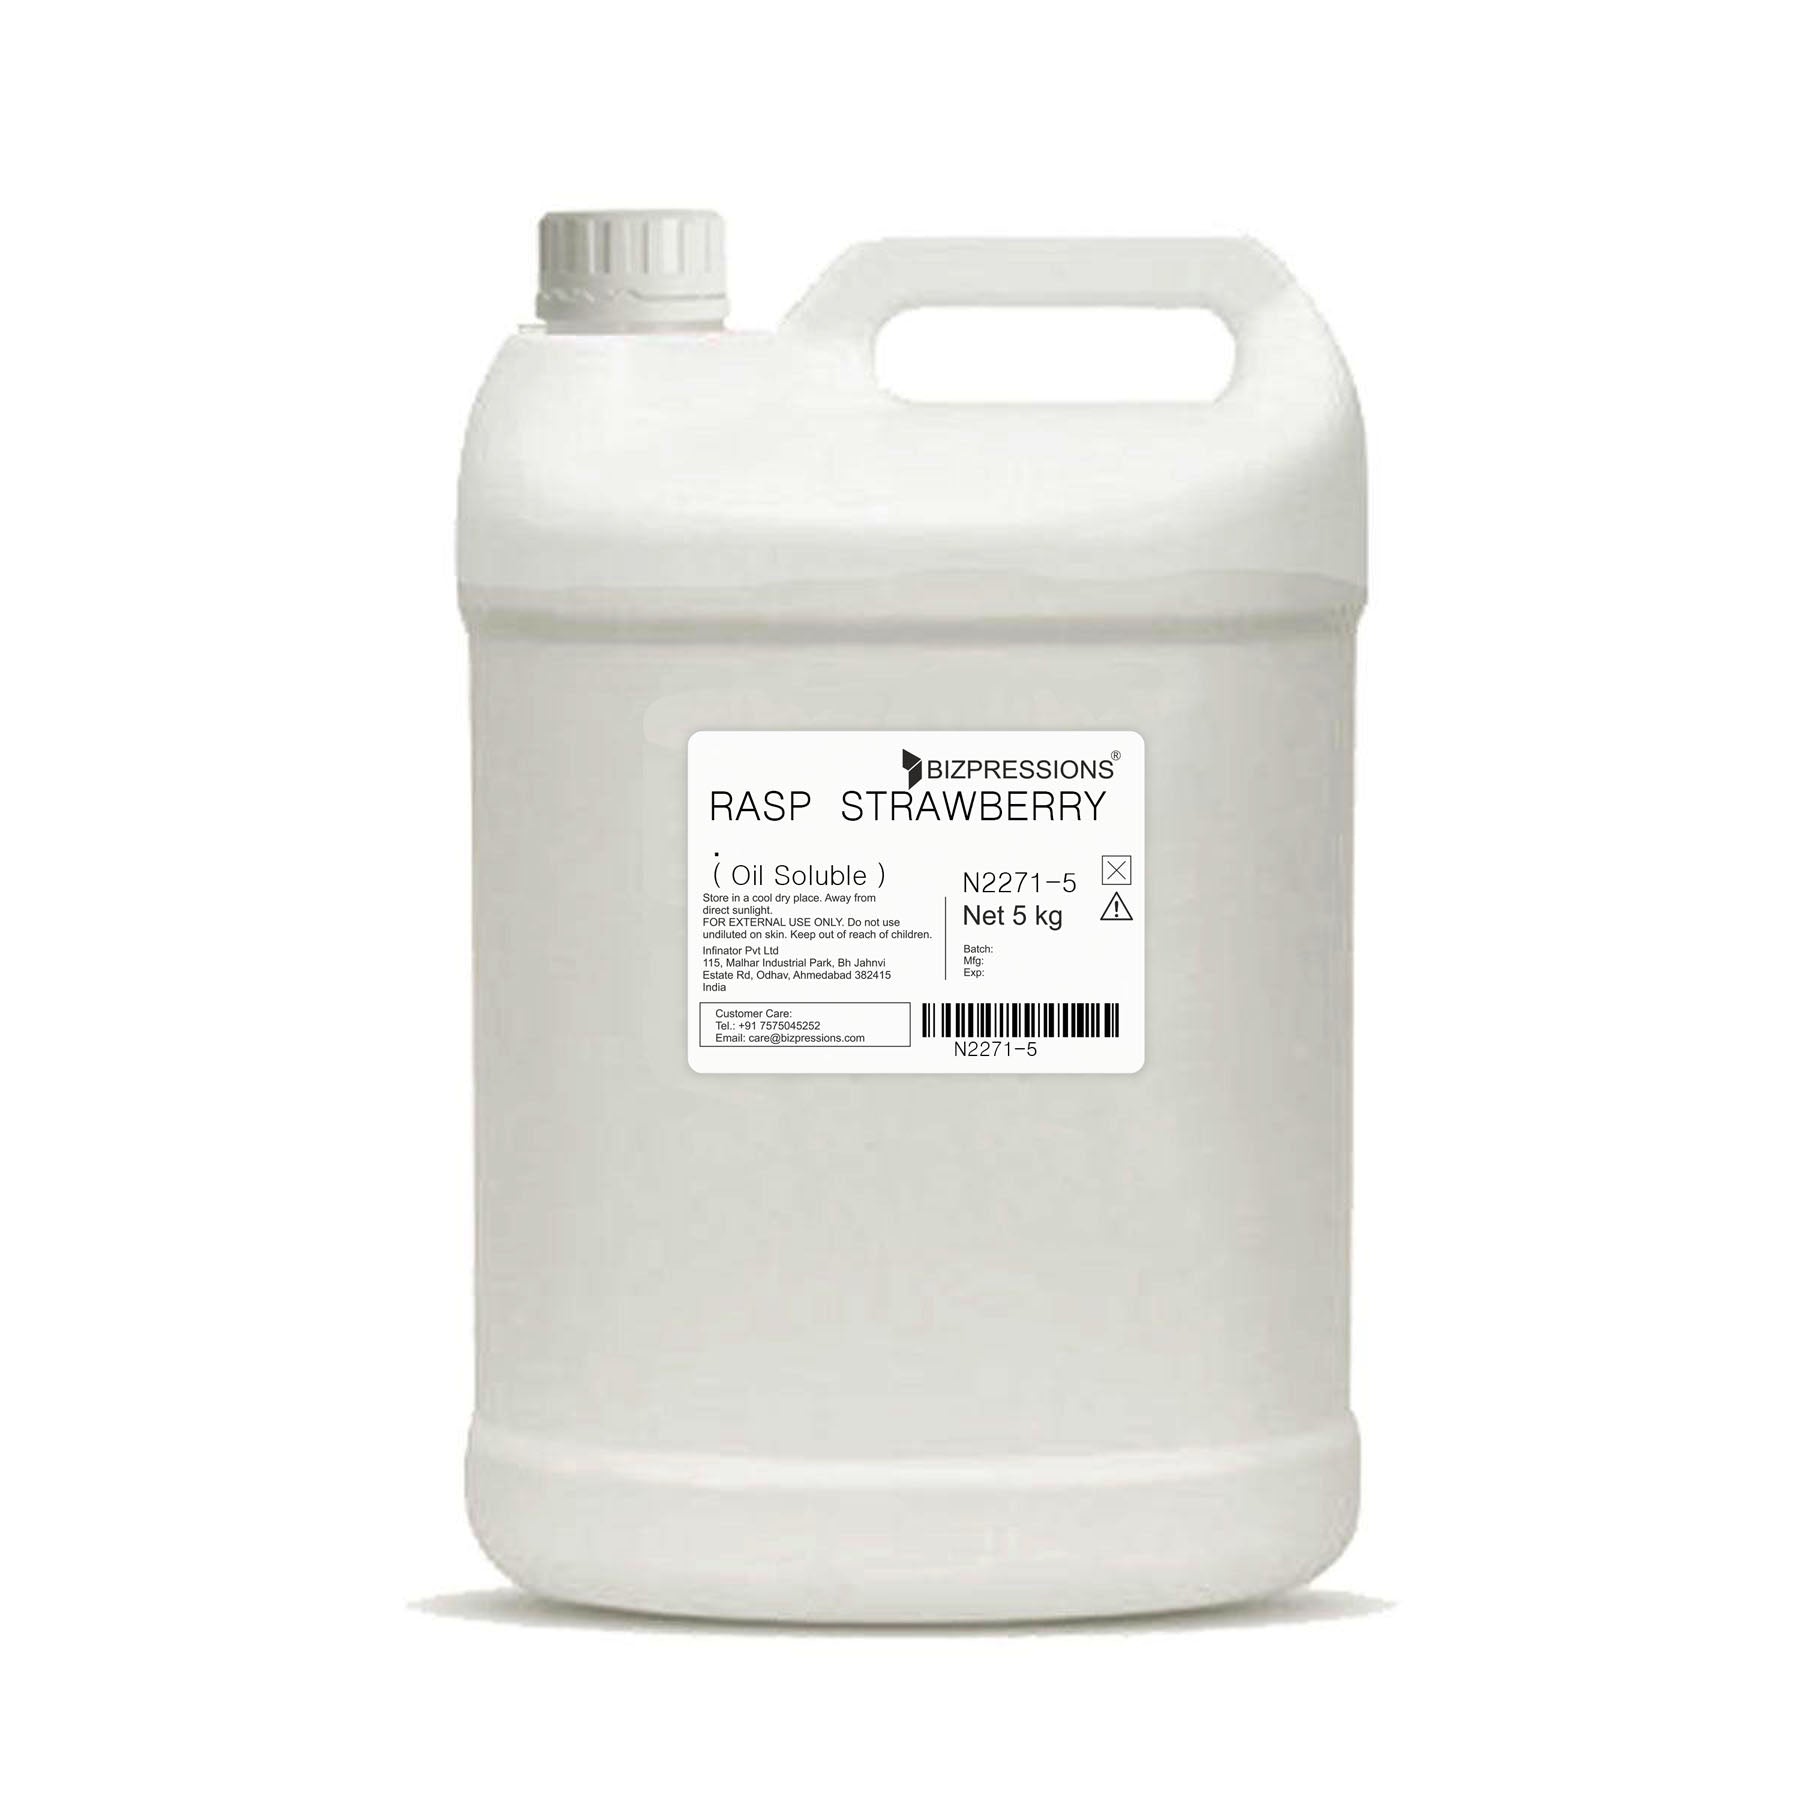 RASP STRAWBERRY - Fragrance ( Oil Soluble ) - 5 kg